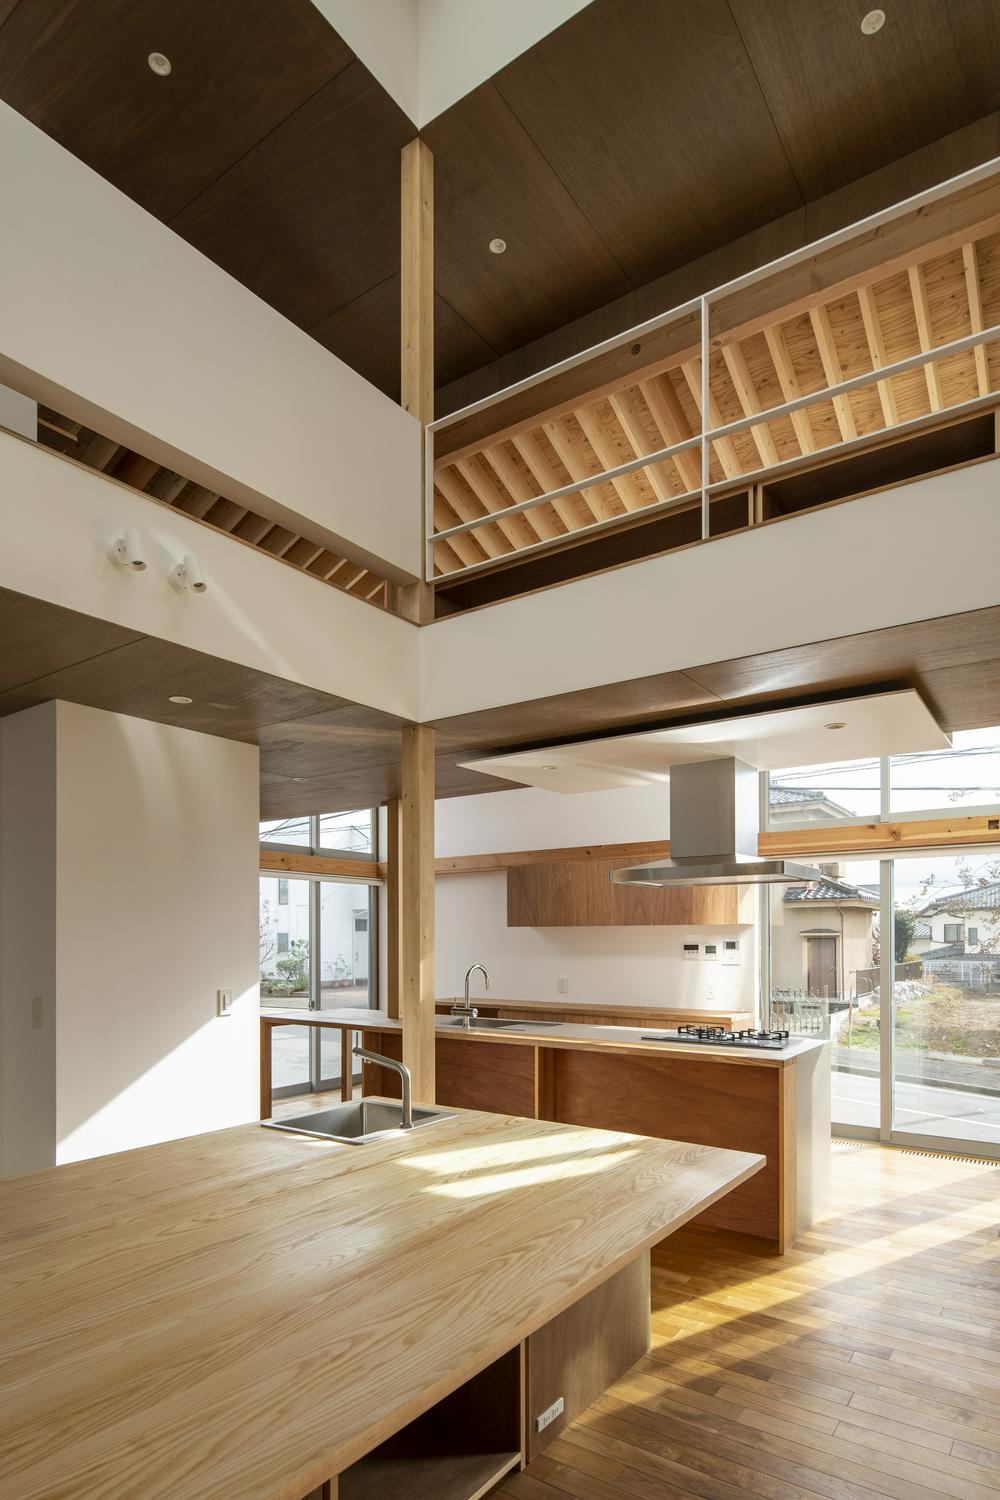 Image of "荏田の住宅", the work by architect : Yoshihiro Kono (image number 12)